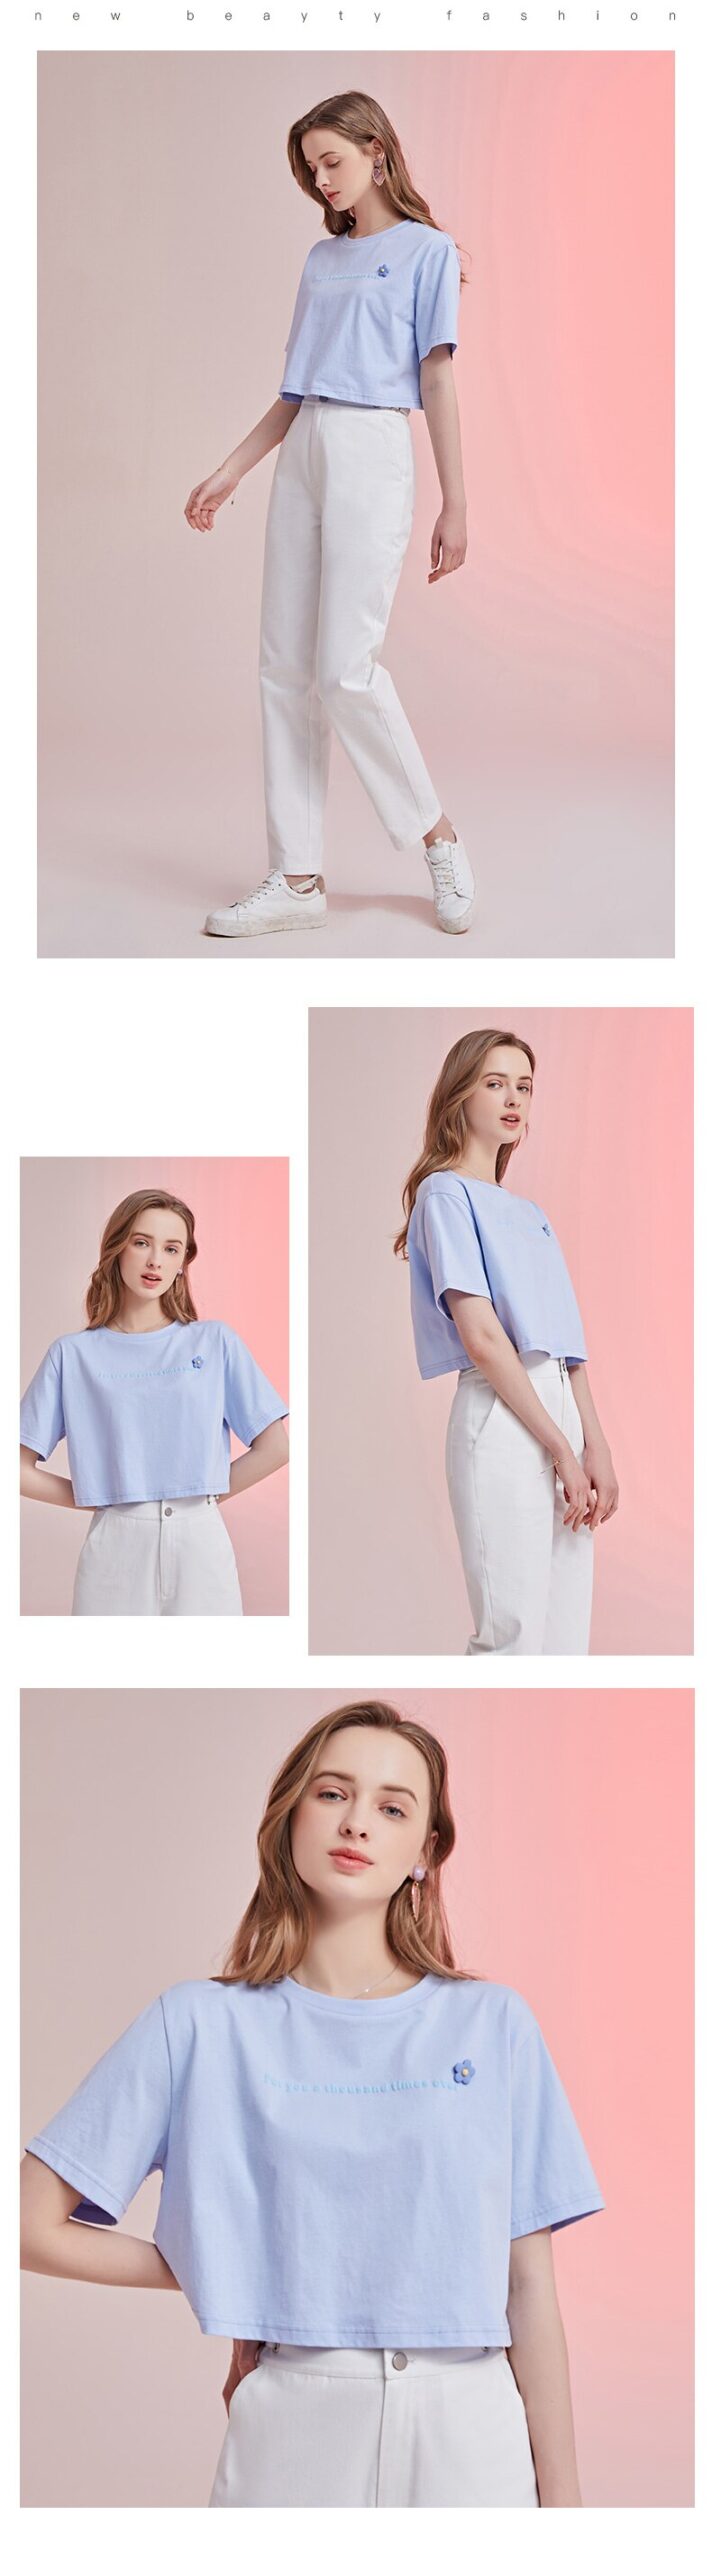 ARTKA 2021 Summer New Women T-shirt 100% Cotton Fashion 3 Colors O-Neck T-shirt Short Sleeve Casual White Short T-shirt TA25112C